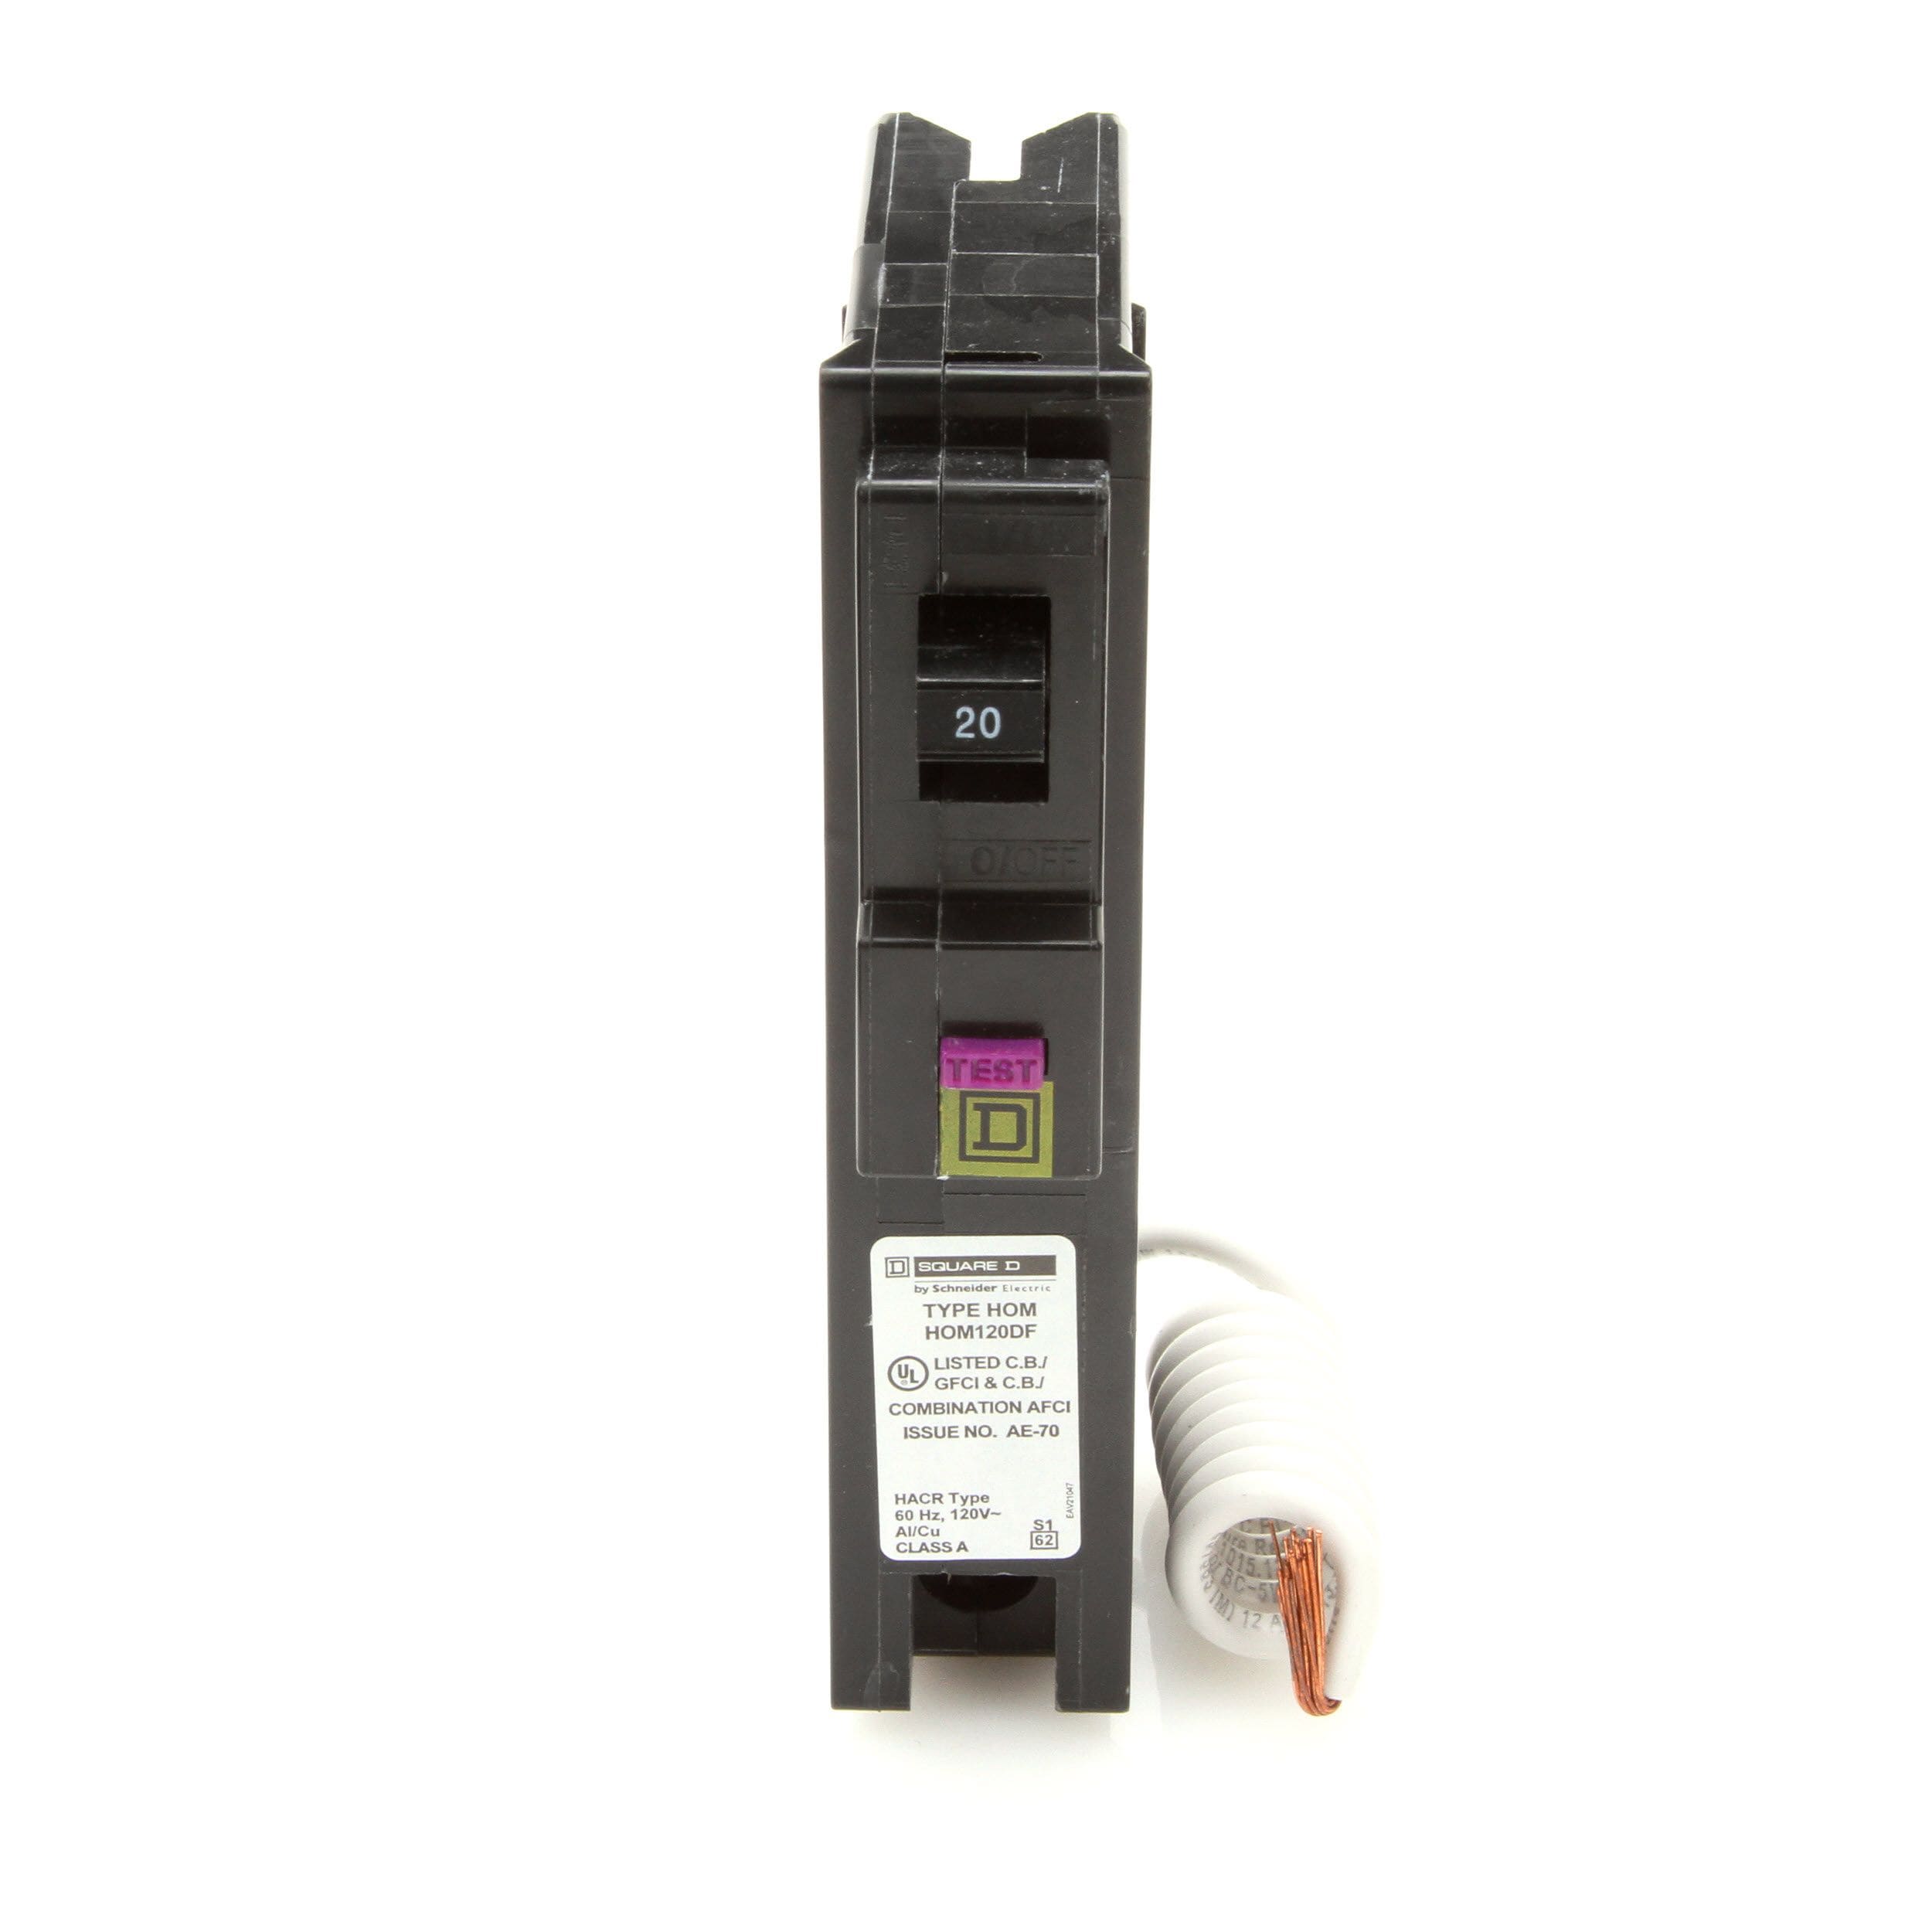 Square D HOM120DFC Homeline 20-Amp Single-Pole Dual Function Circuit Breaker for sale online